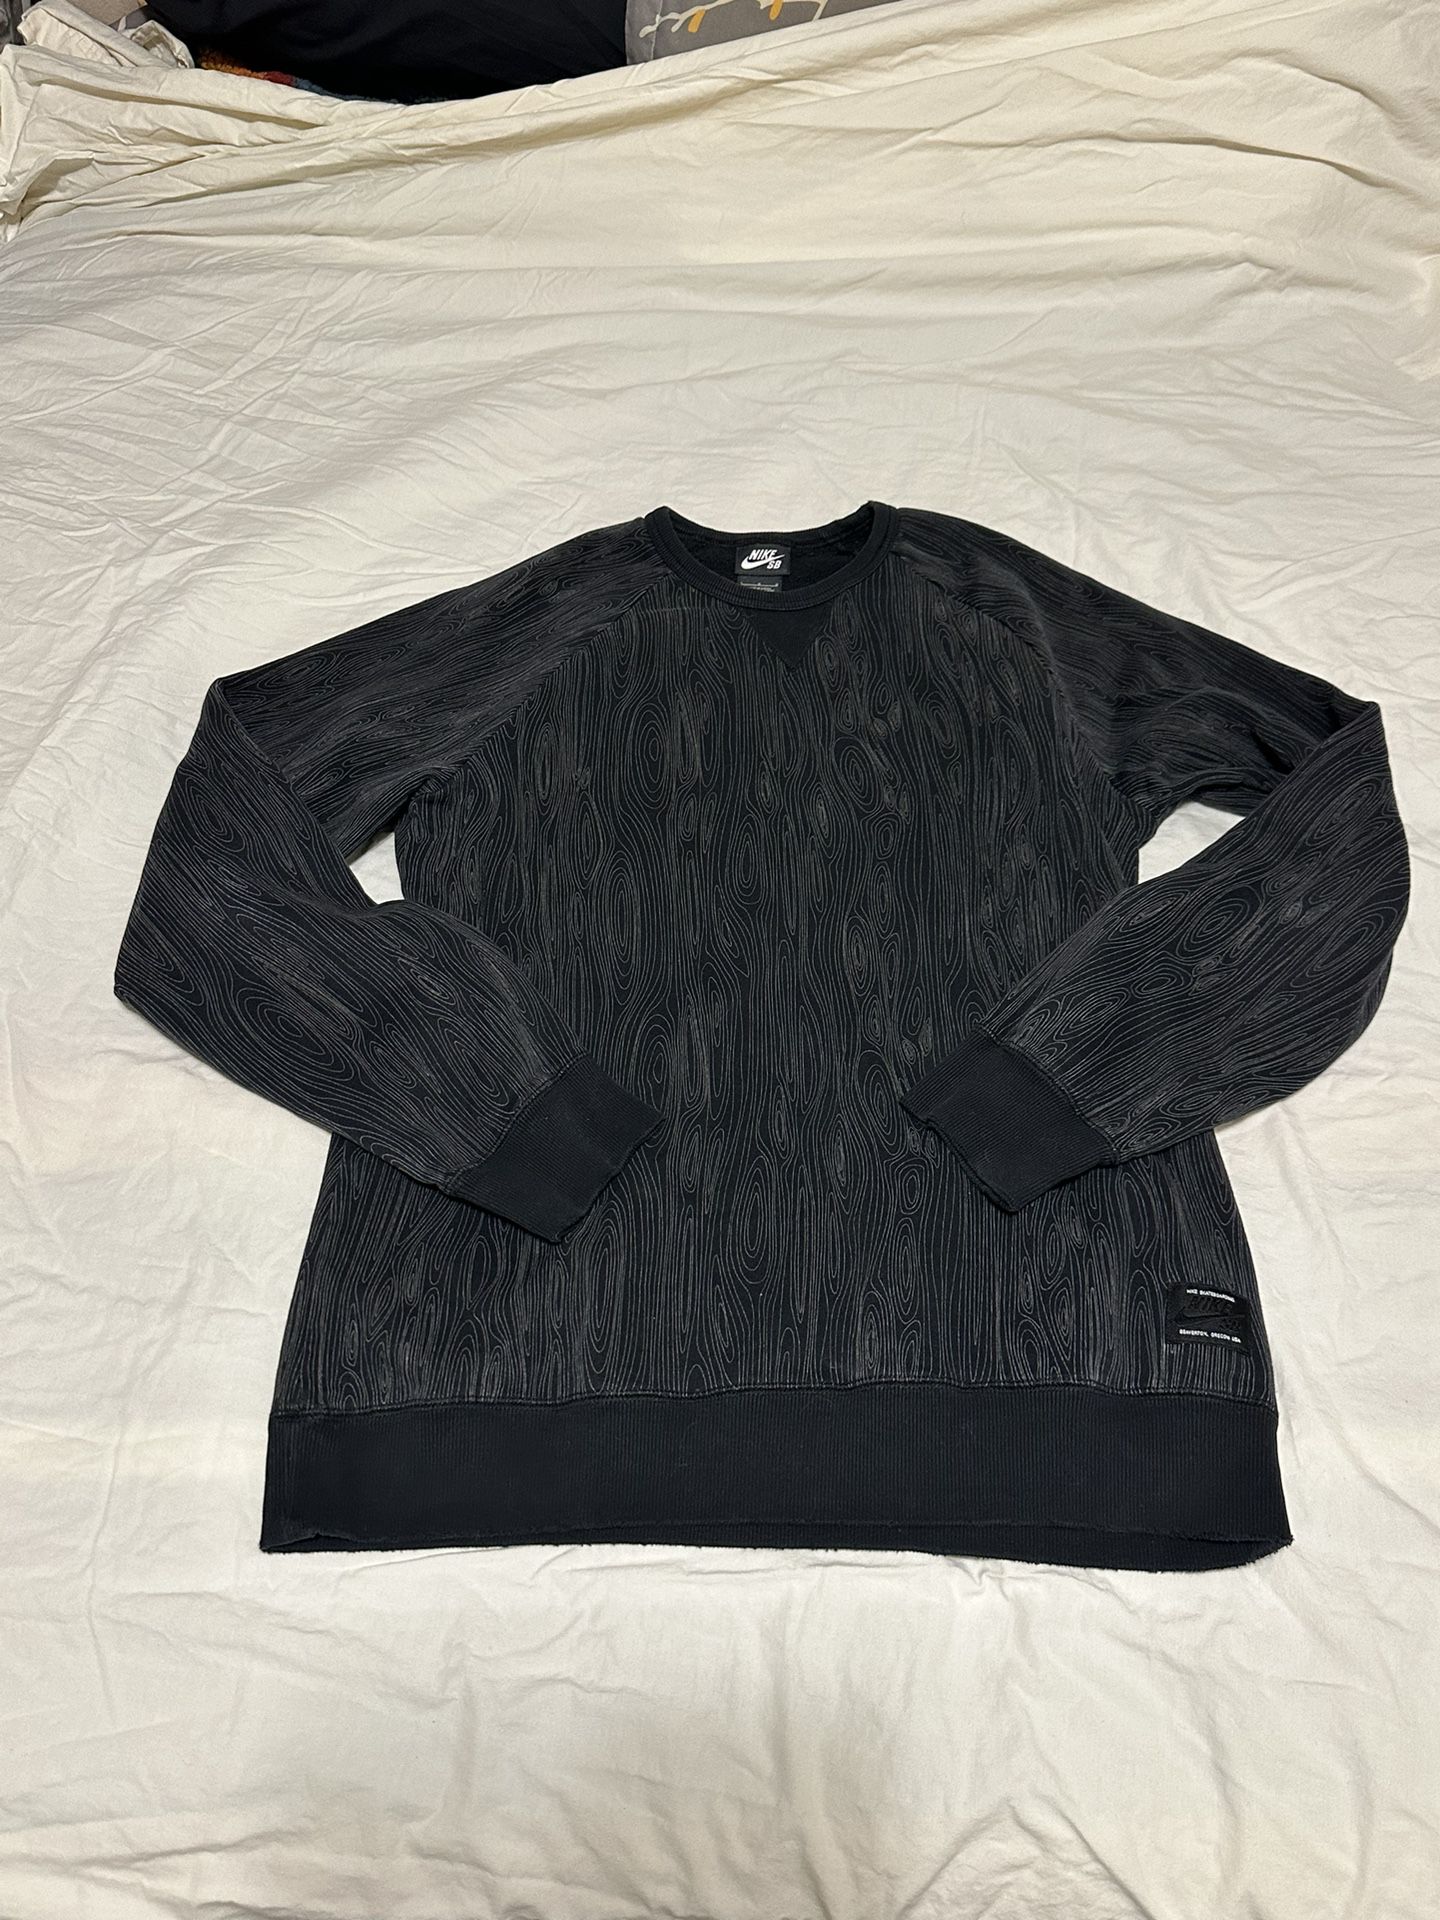 Nike SB Black Gray Wood Grain Men’s Crewneck Skateboard Pullover Sweatshirt Sz L